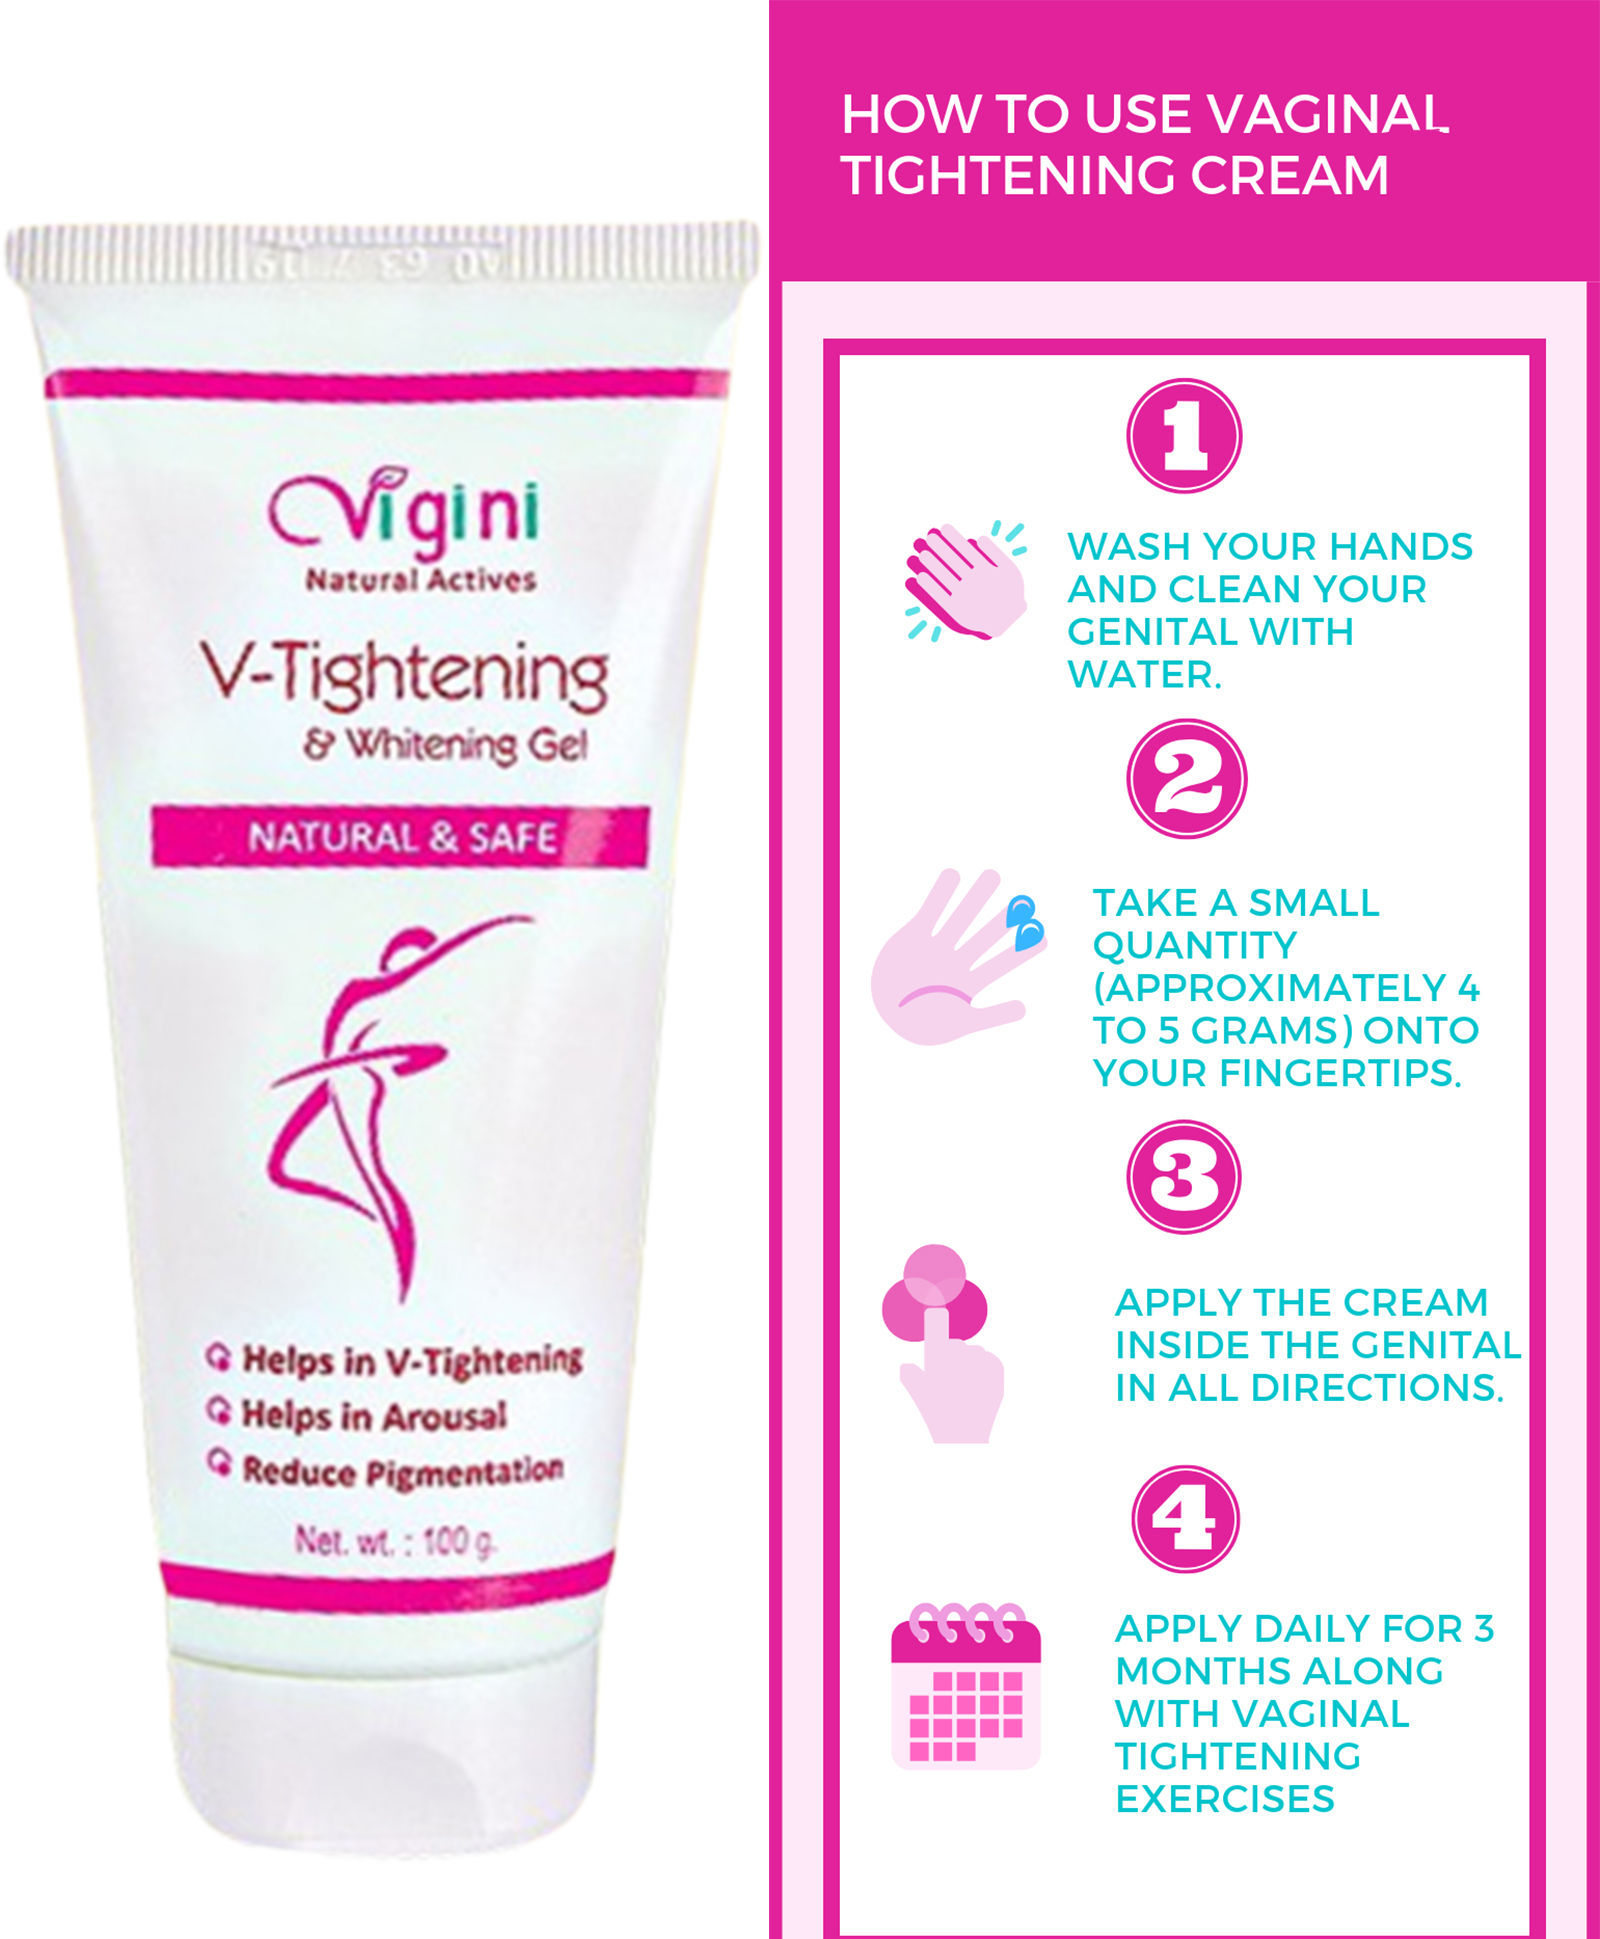 Buy Vigini 100 Natural Actives Vaginal V Tightening Whitening Tight Moisturizer Lubricant Gel